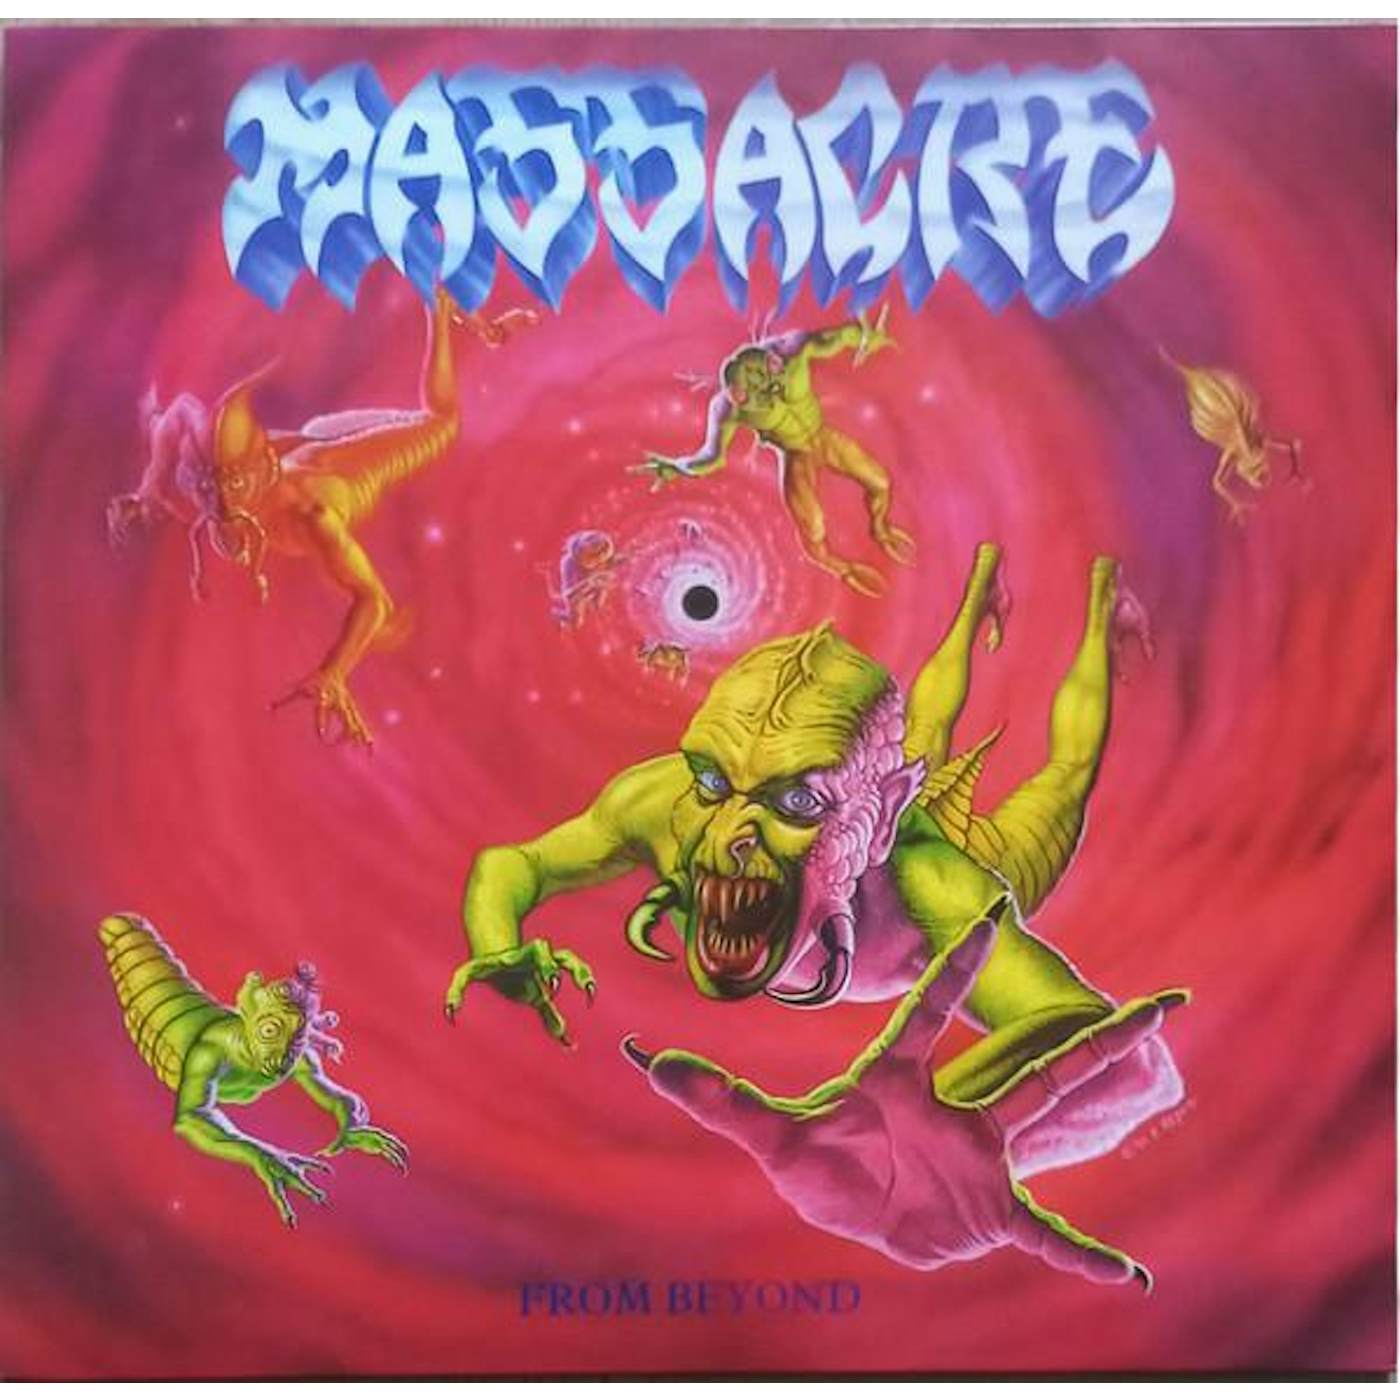 Massacre FROM BEYOND Vinyl Record